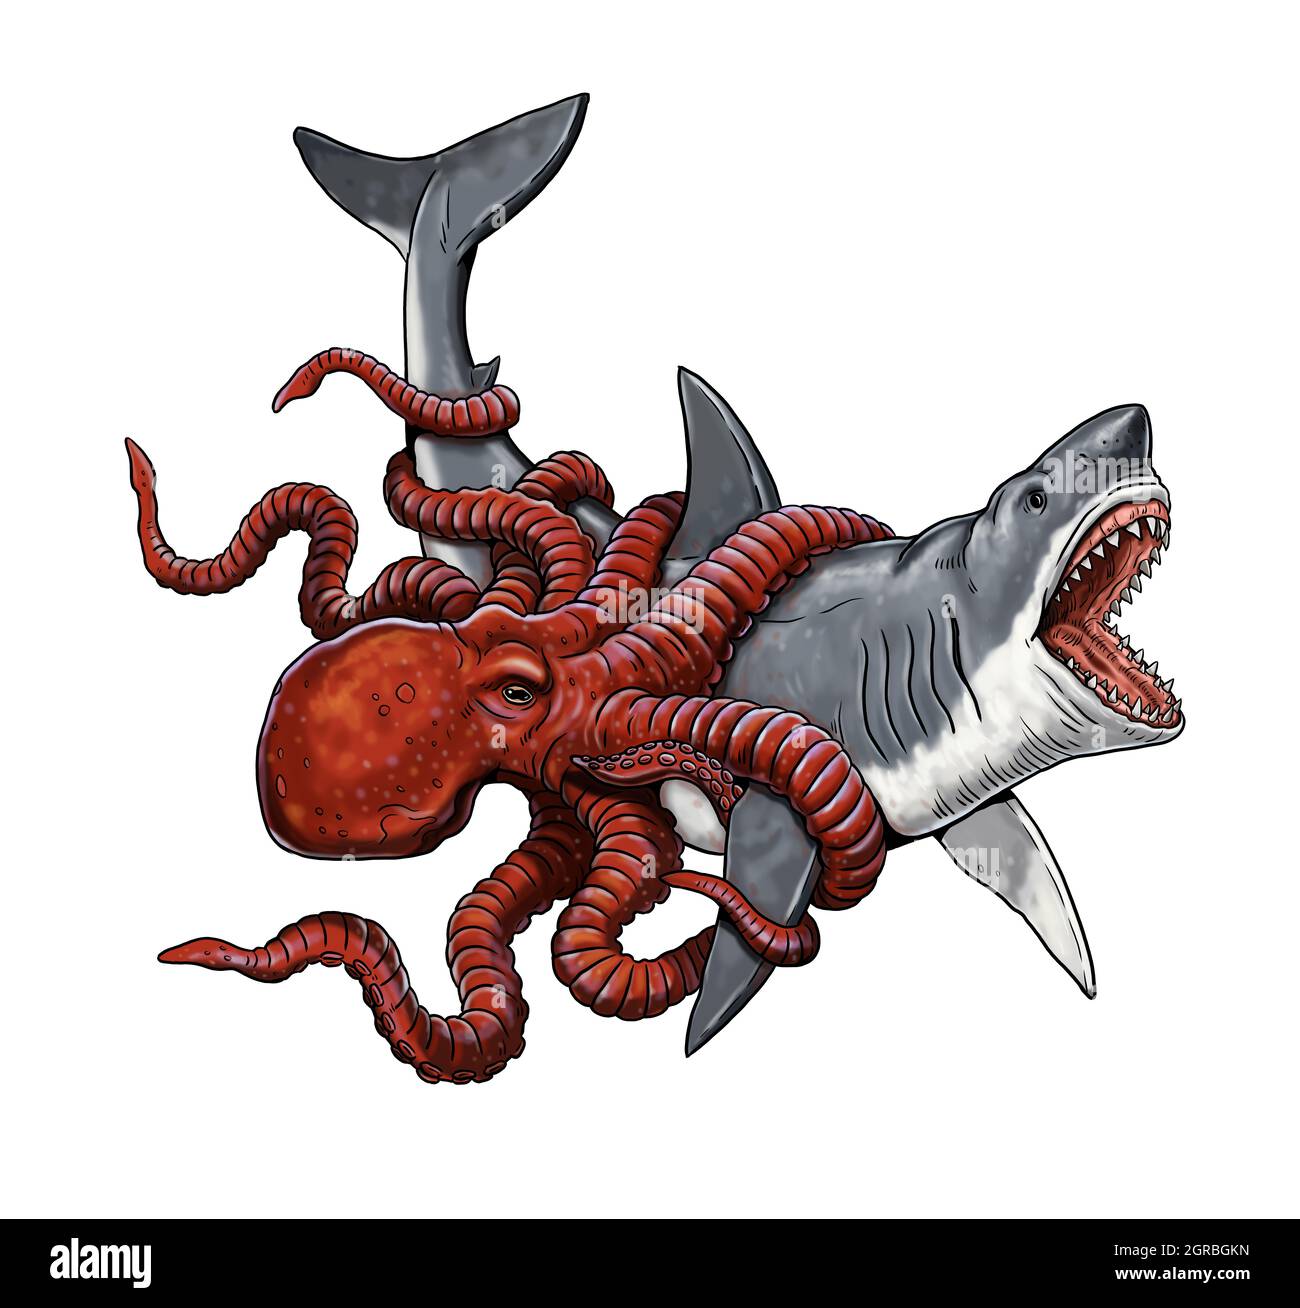 Giant octopus attacks a shark. Battle of the animals illustration. Stock Photo